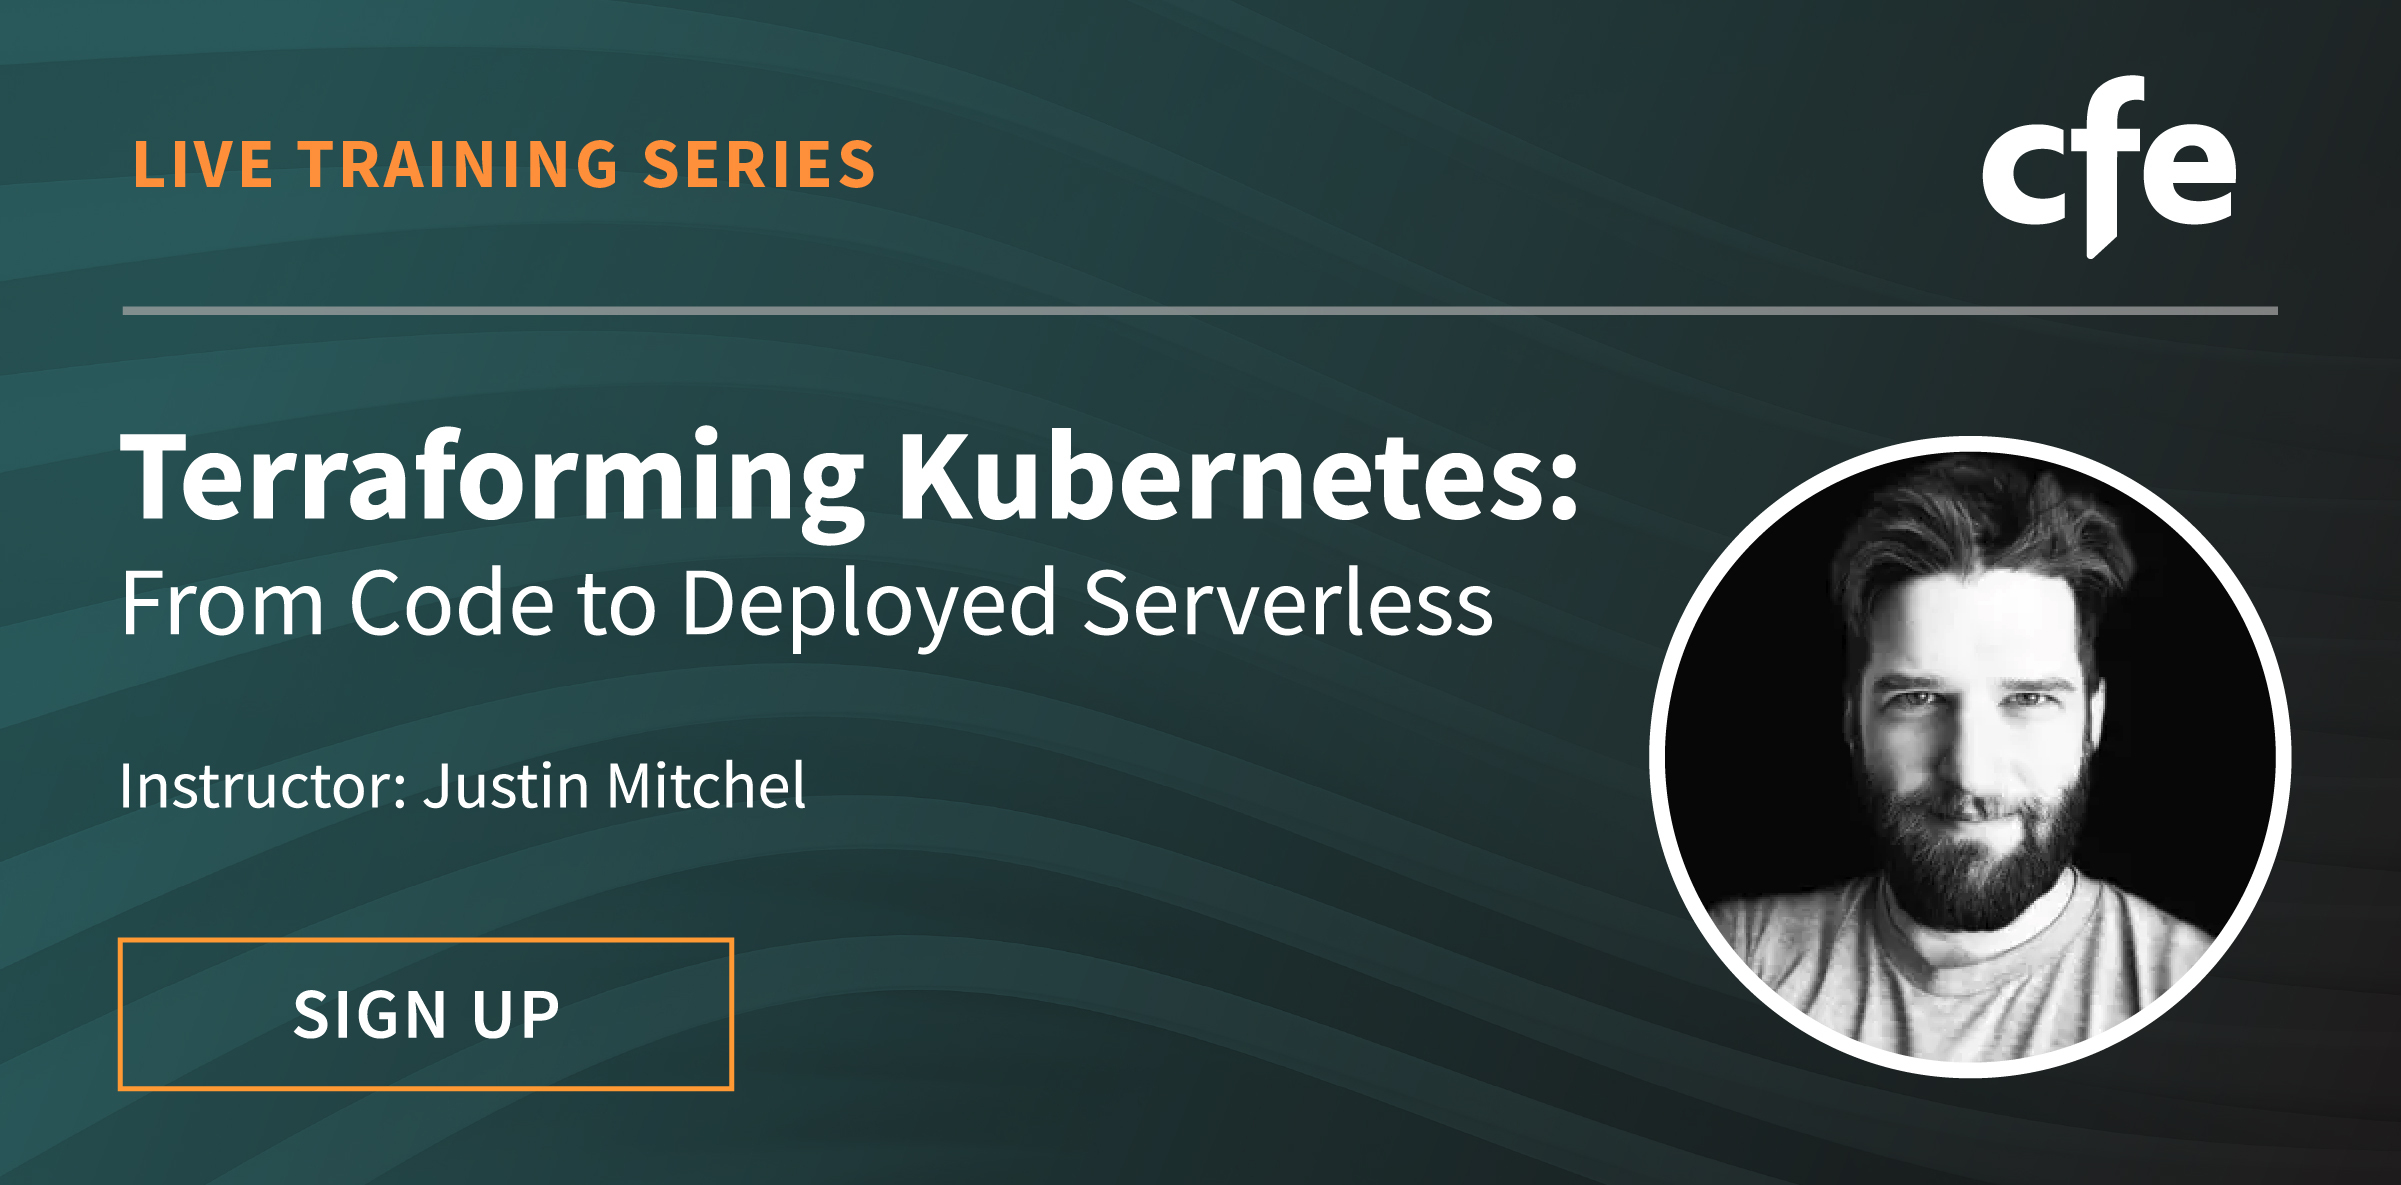 Terraforming Kubernetes: From Code to Deployed Serverless